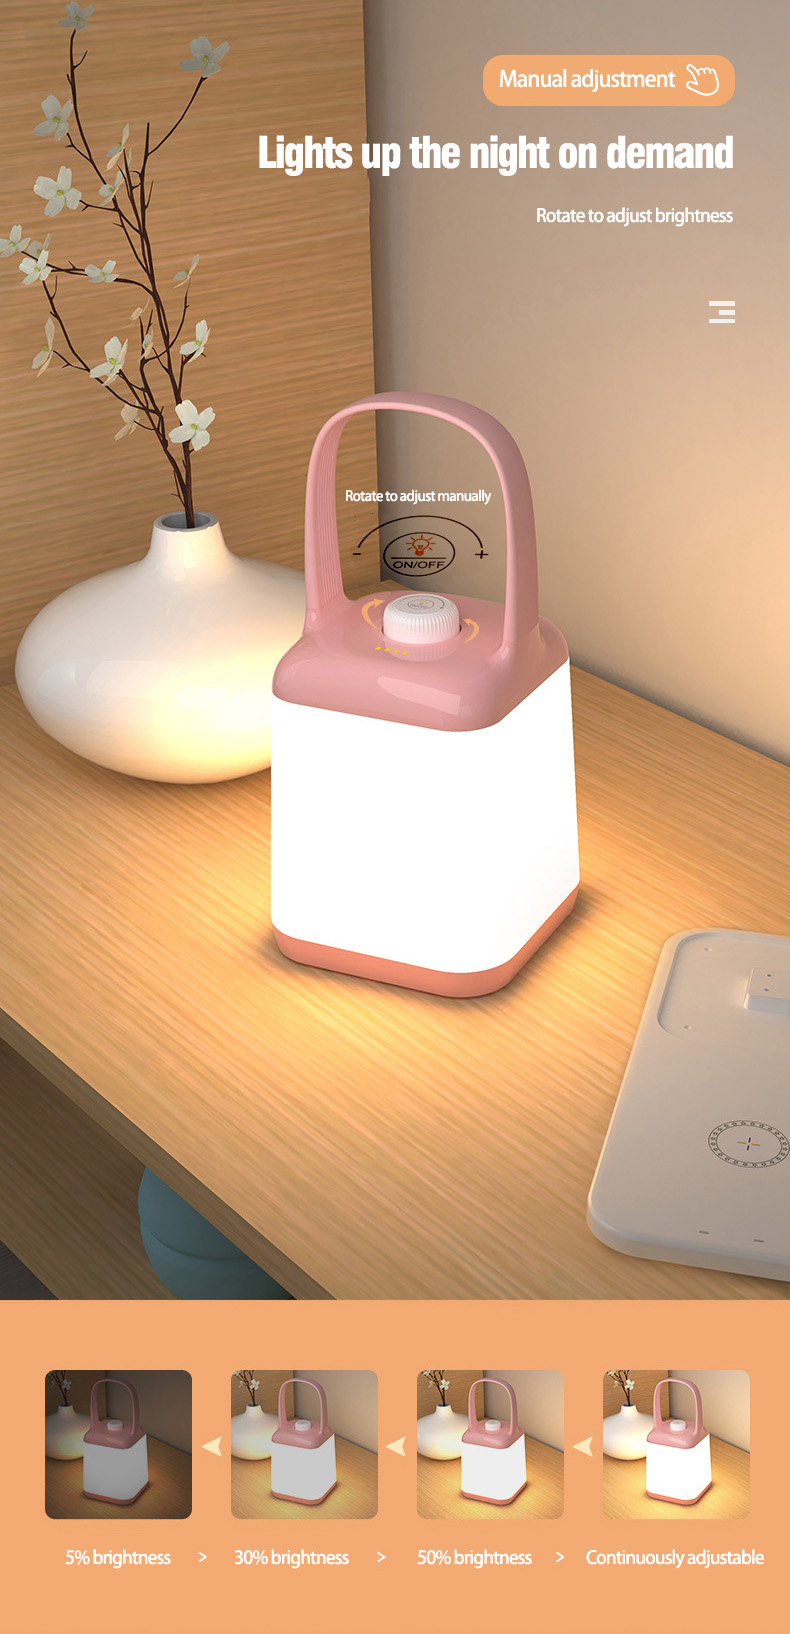 Surbort Portable Wireless Lighting Rechargeable Desk Lamp, Super Bright LED 6500K, 3 Color Lighting Modes